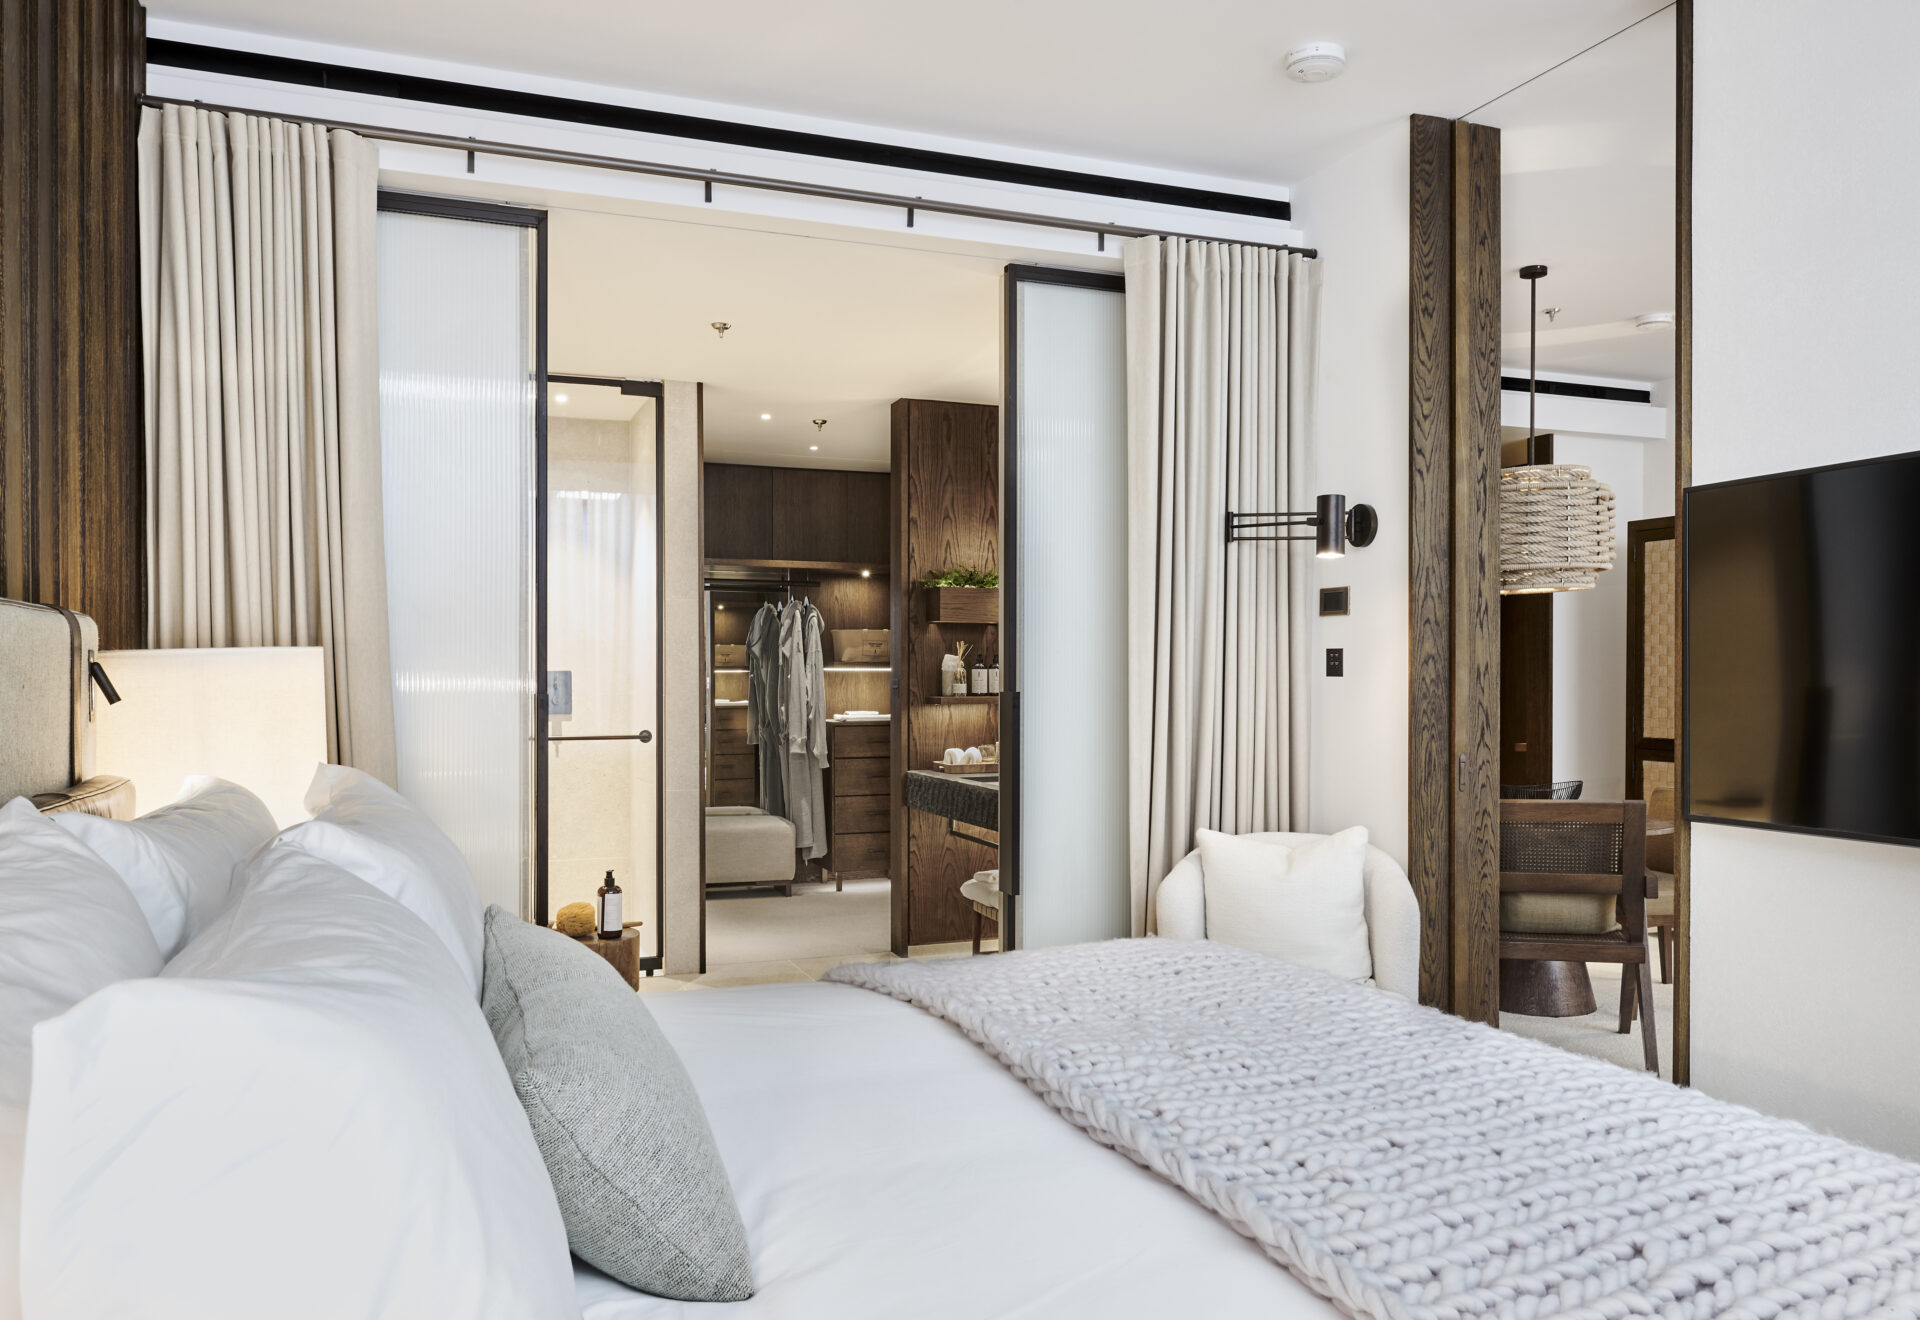 1 Hotel Mayfair unveils stunning interiors ahead of opening